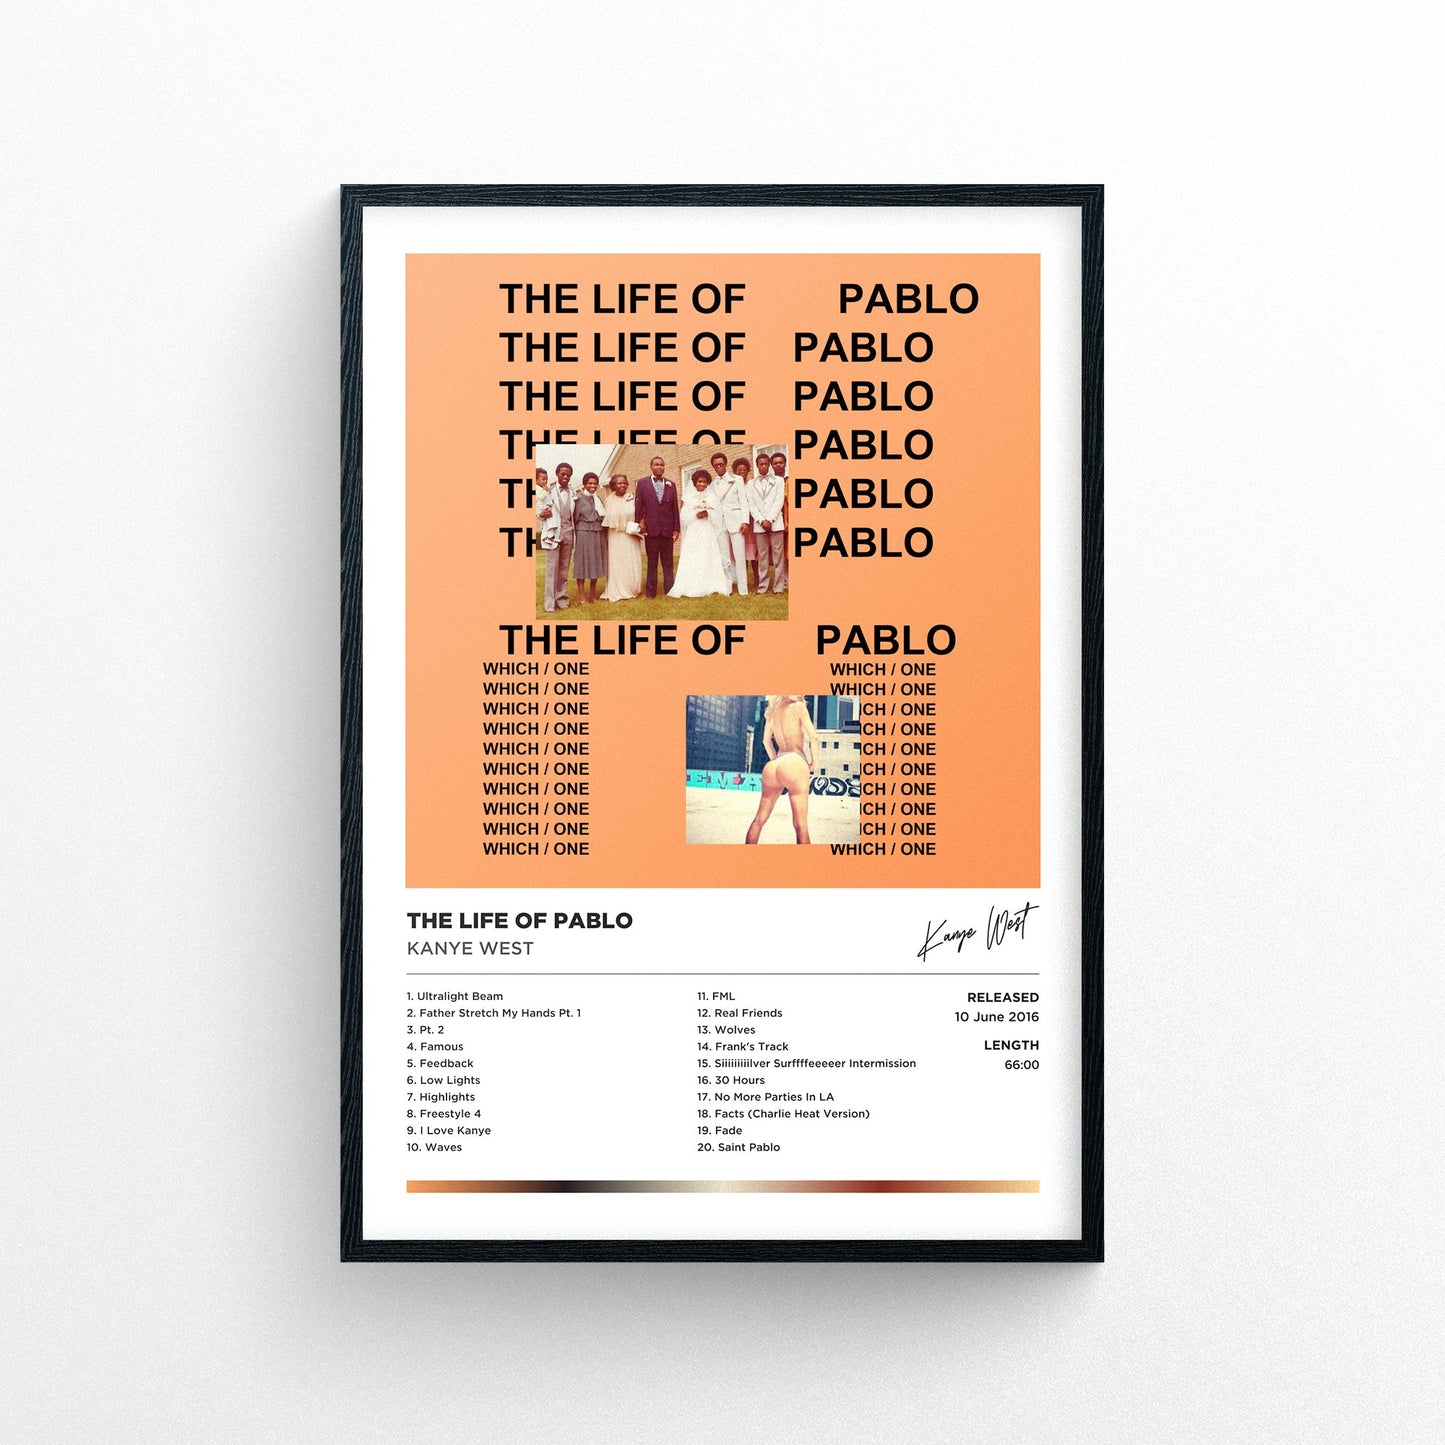 Kanye West - Life of Pablo Framed Poster Print | Polaroid Style | Album Cover Artwork